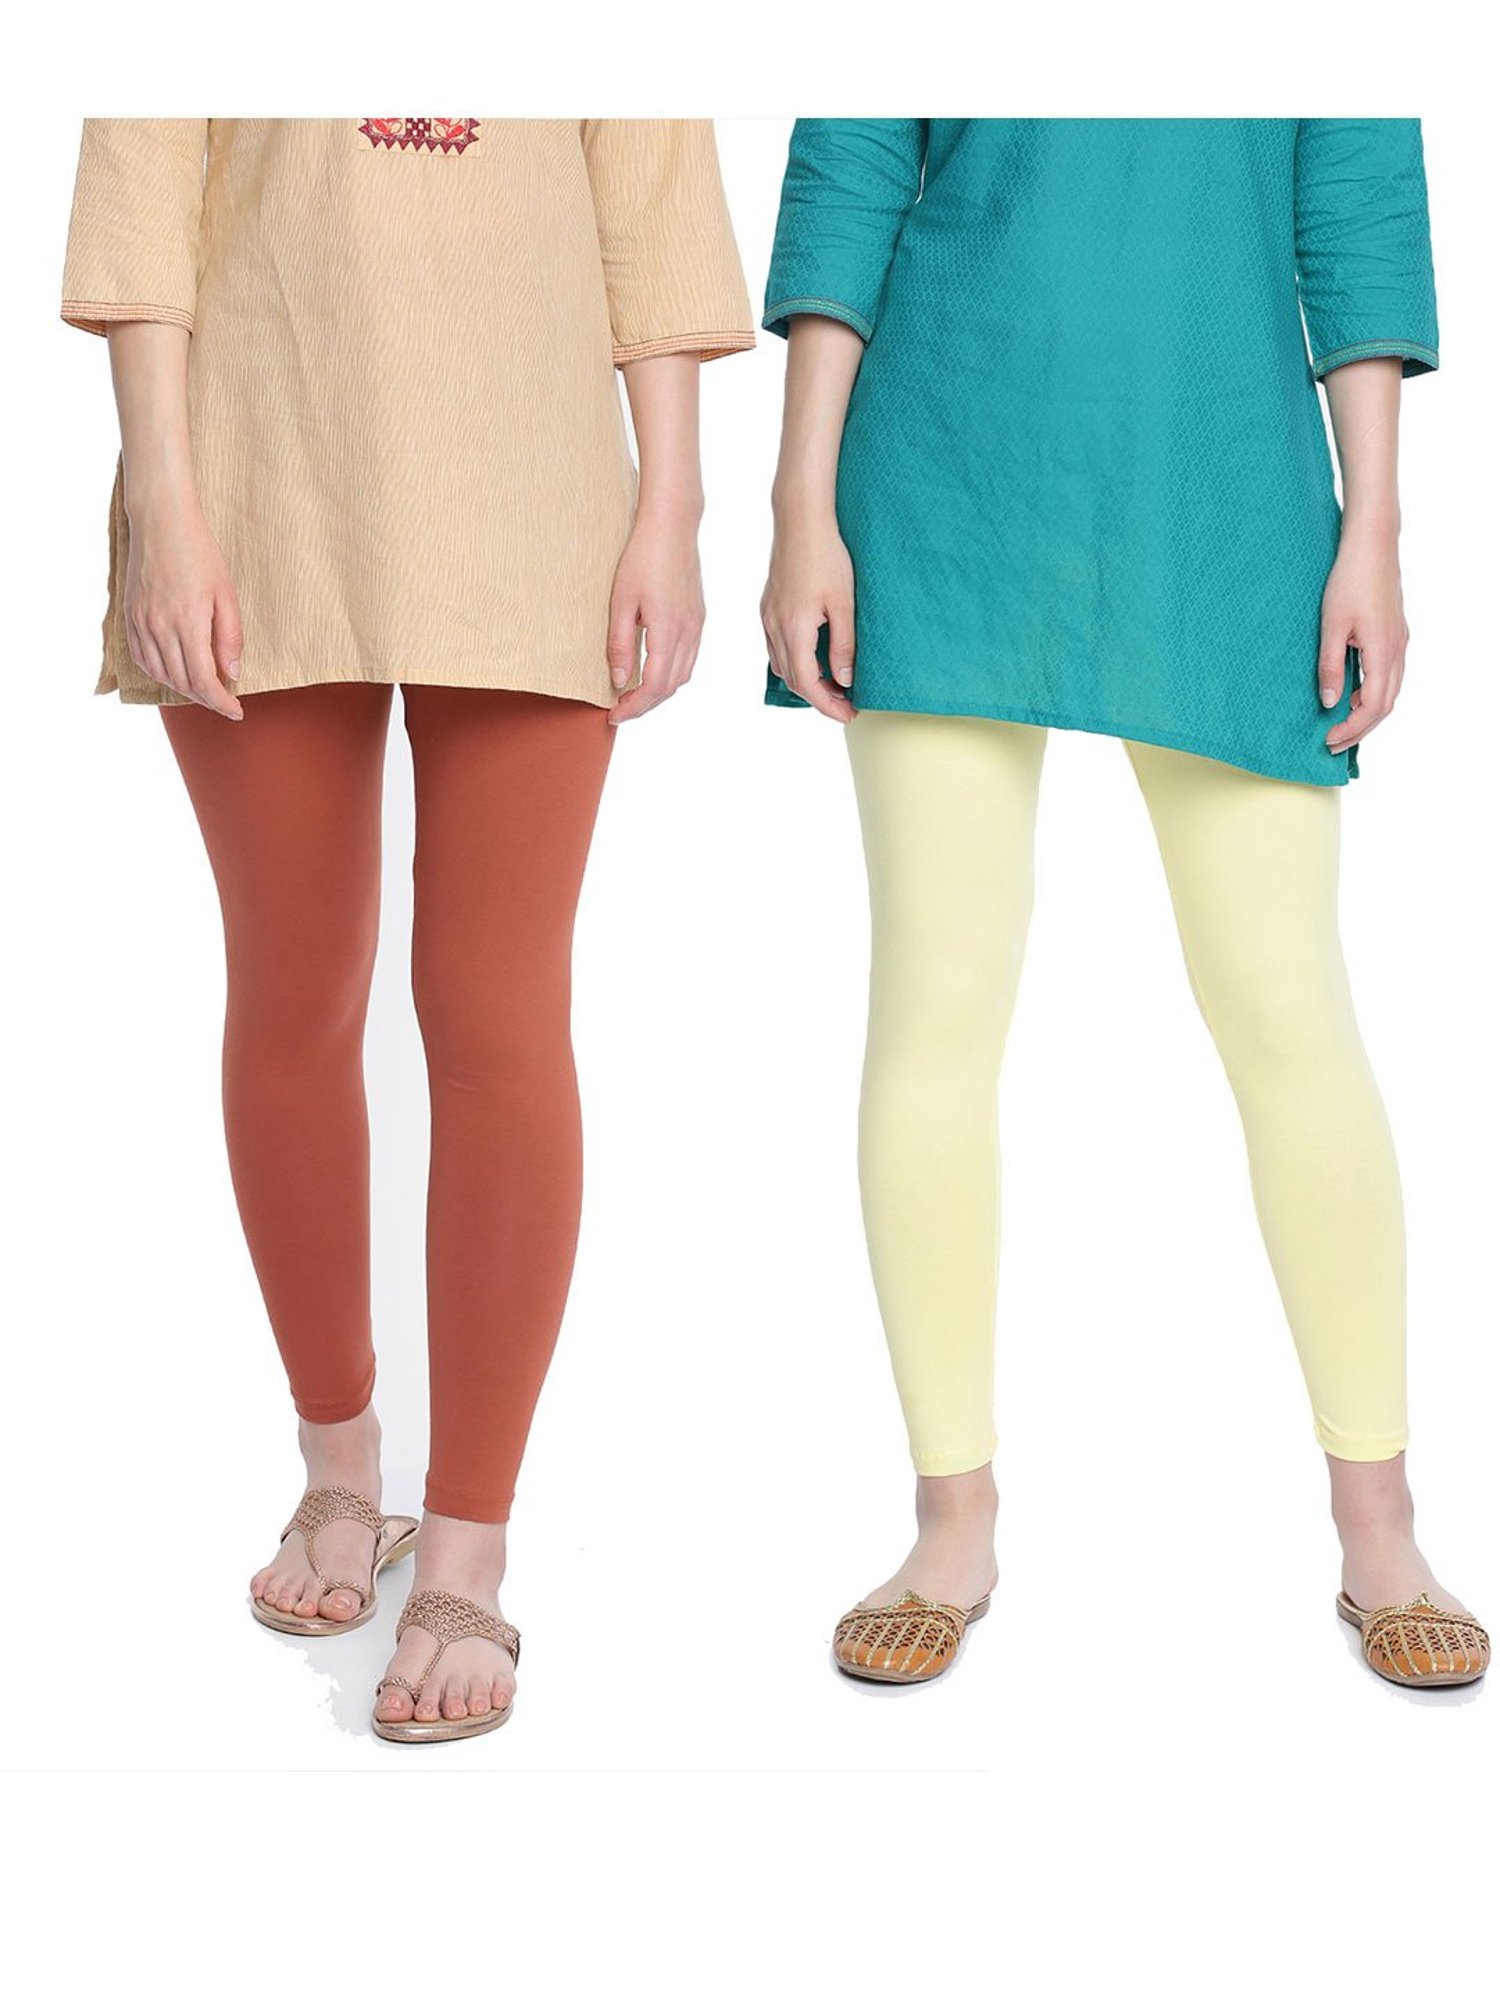 Buy Dollar Missy Brown Cotton Leggings for Women's Online @ Tata CLiQ